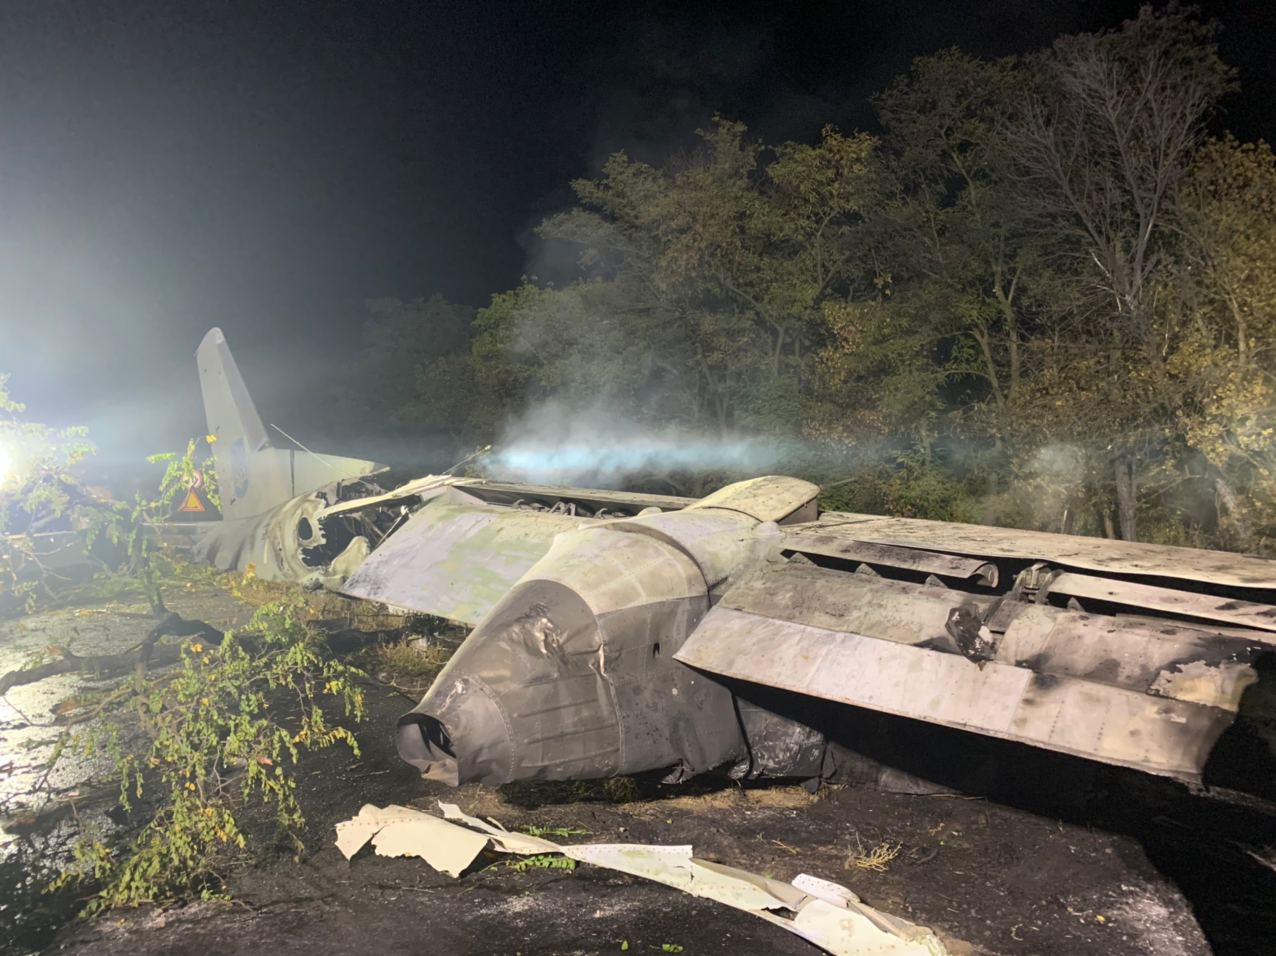 Крушение самолета в Чугуеве: в соцсетях появились имена и фото летевших в АН-26